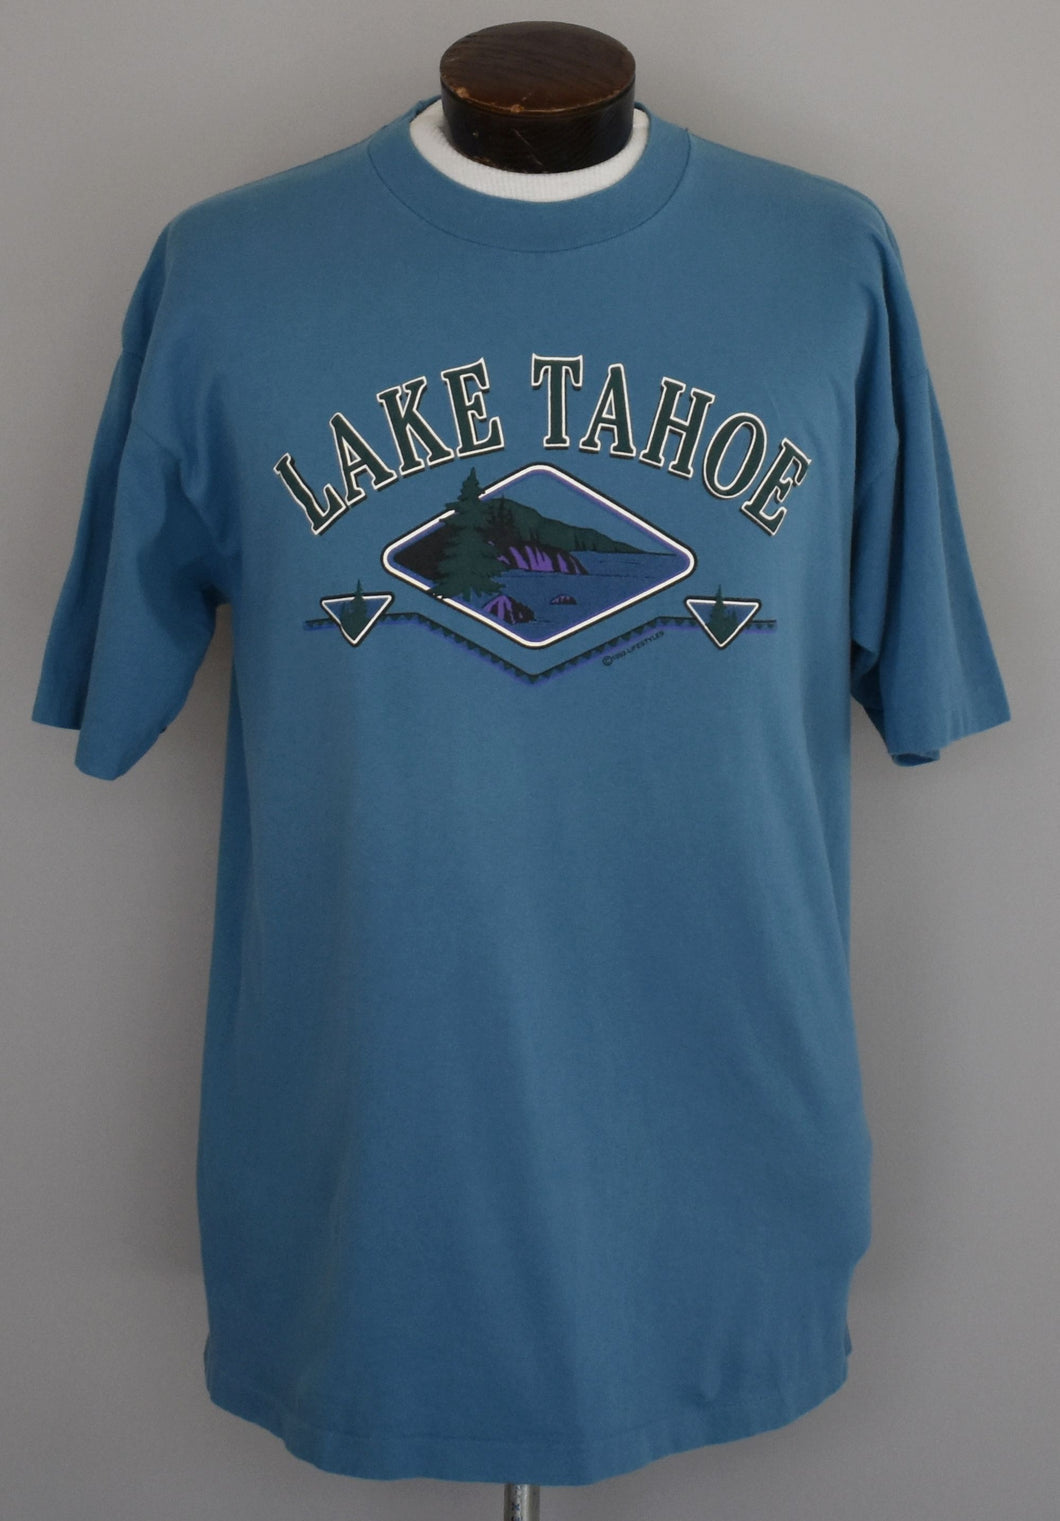 Vintage 90s Lake Tahoe Souvenir Tee Size Large to XL